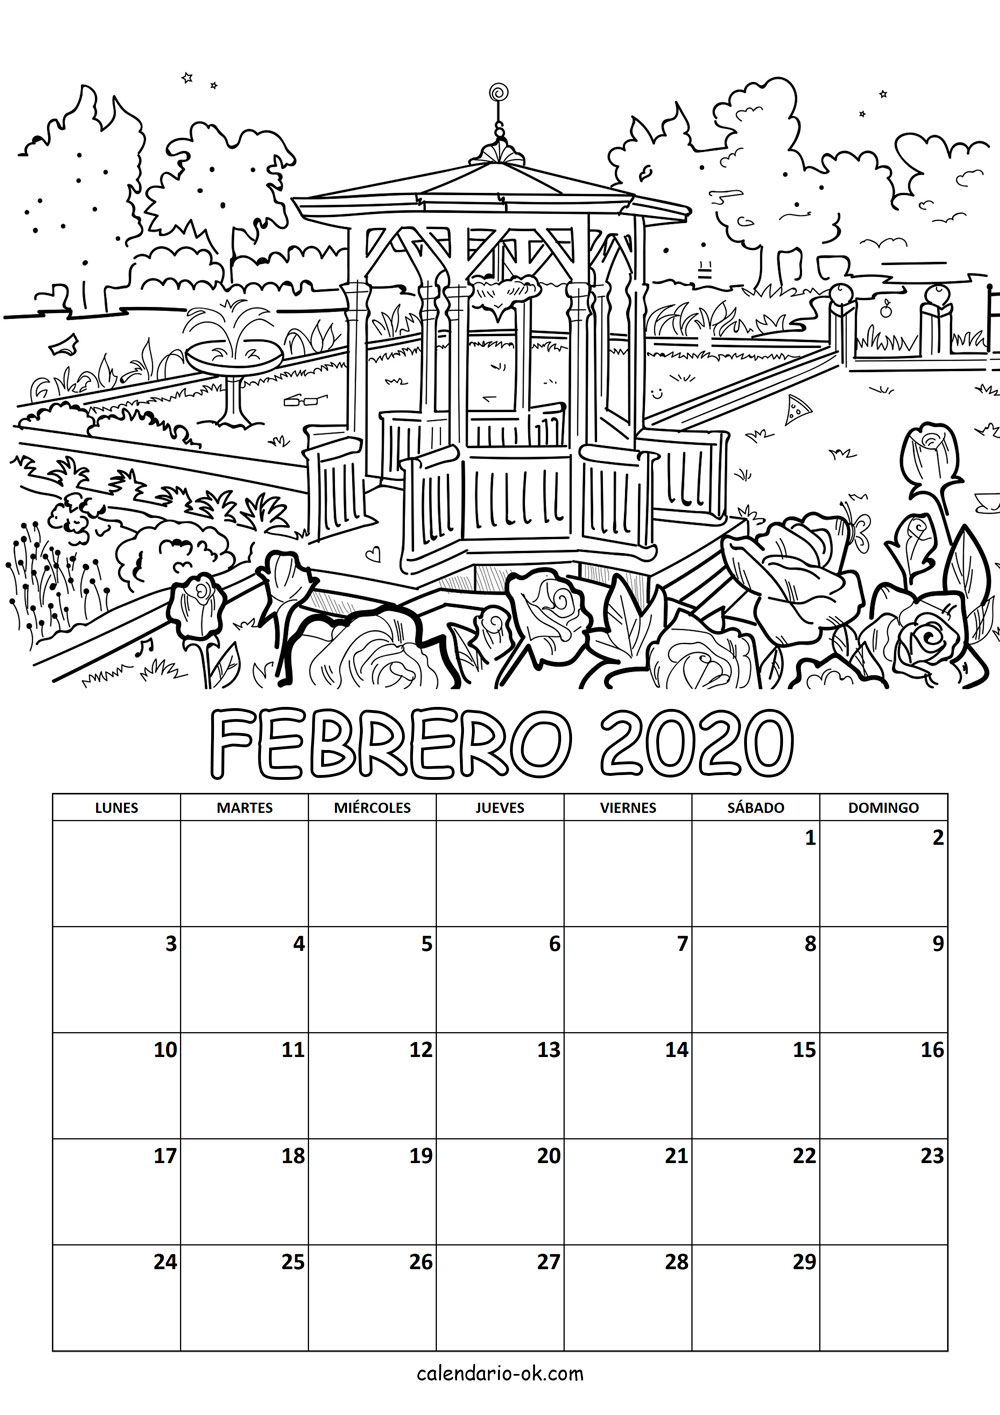 Calendario FEBRERO 2020 COLOREAR